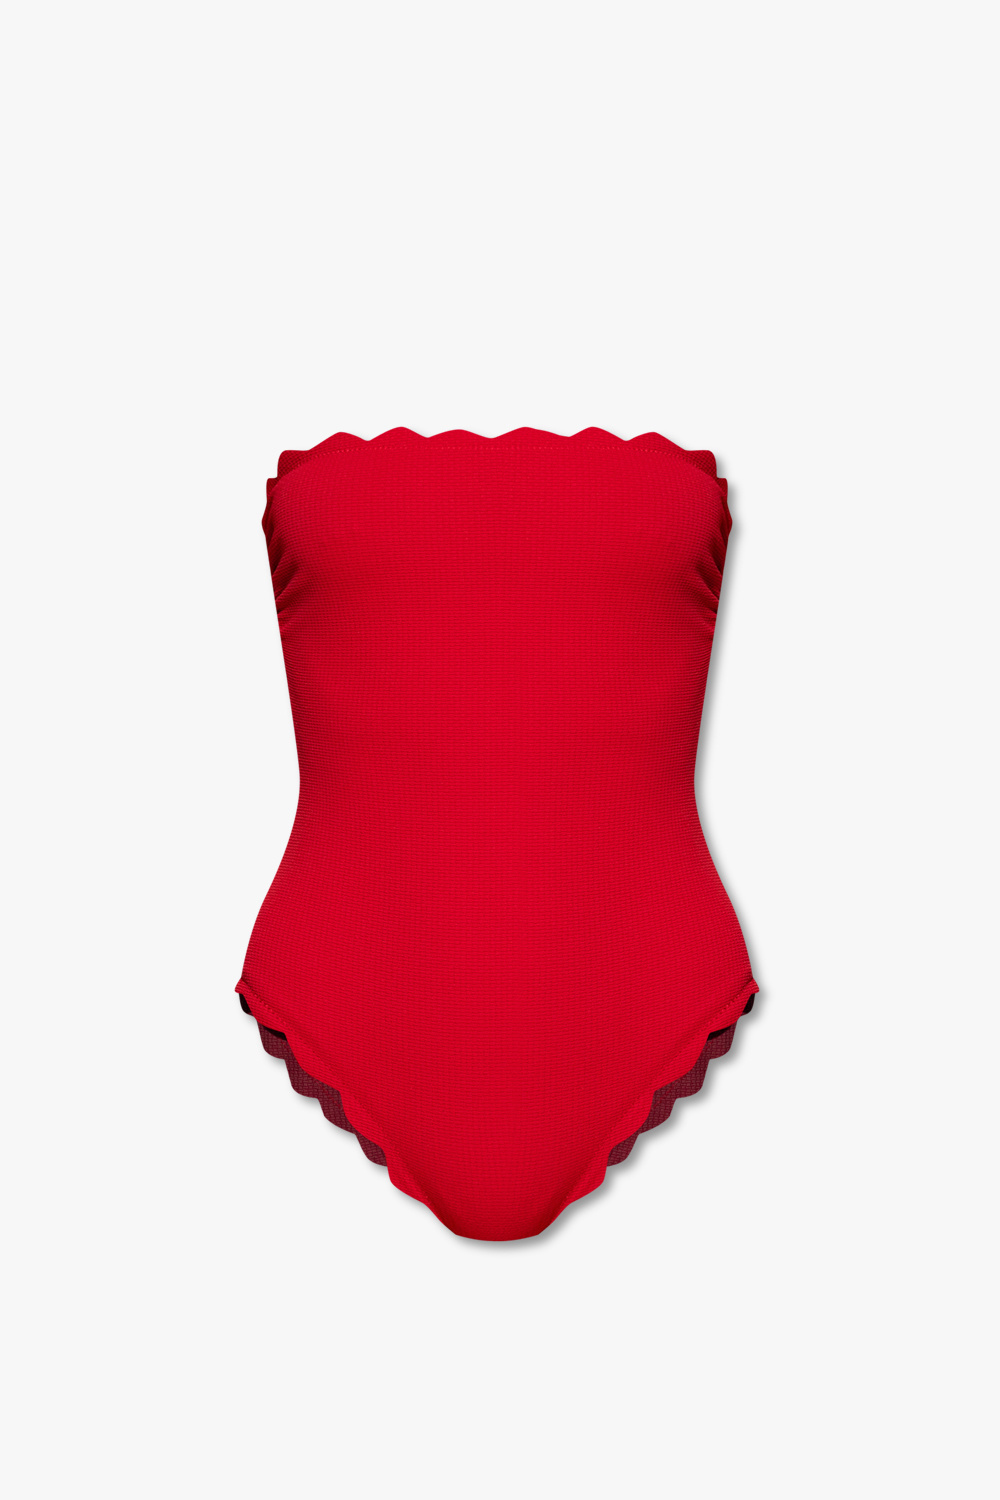 Marysia ‘Chesapeake Maillot’ one-piece swimsuit